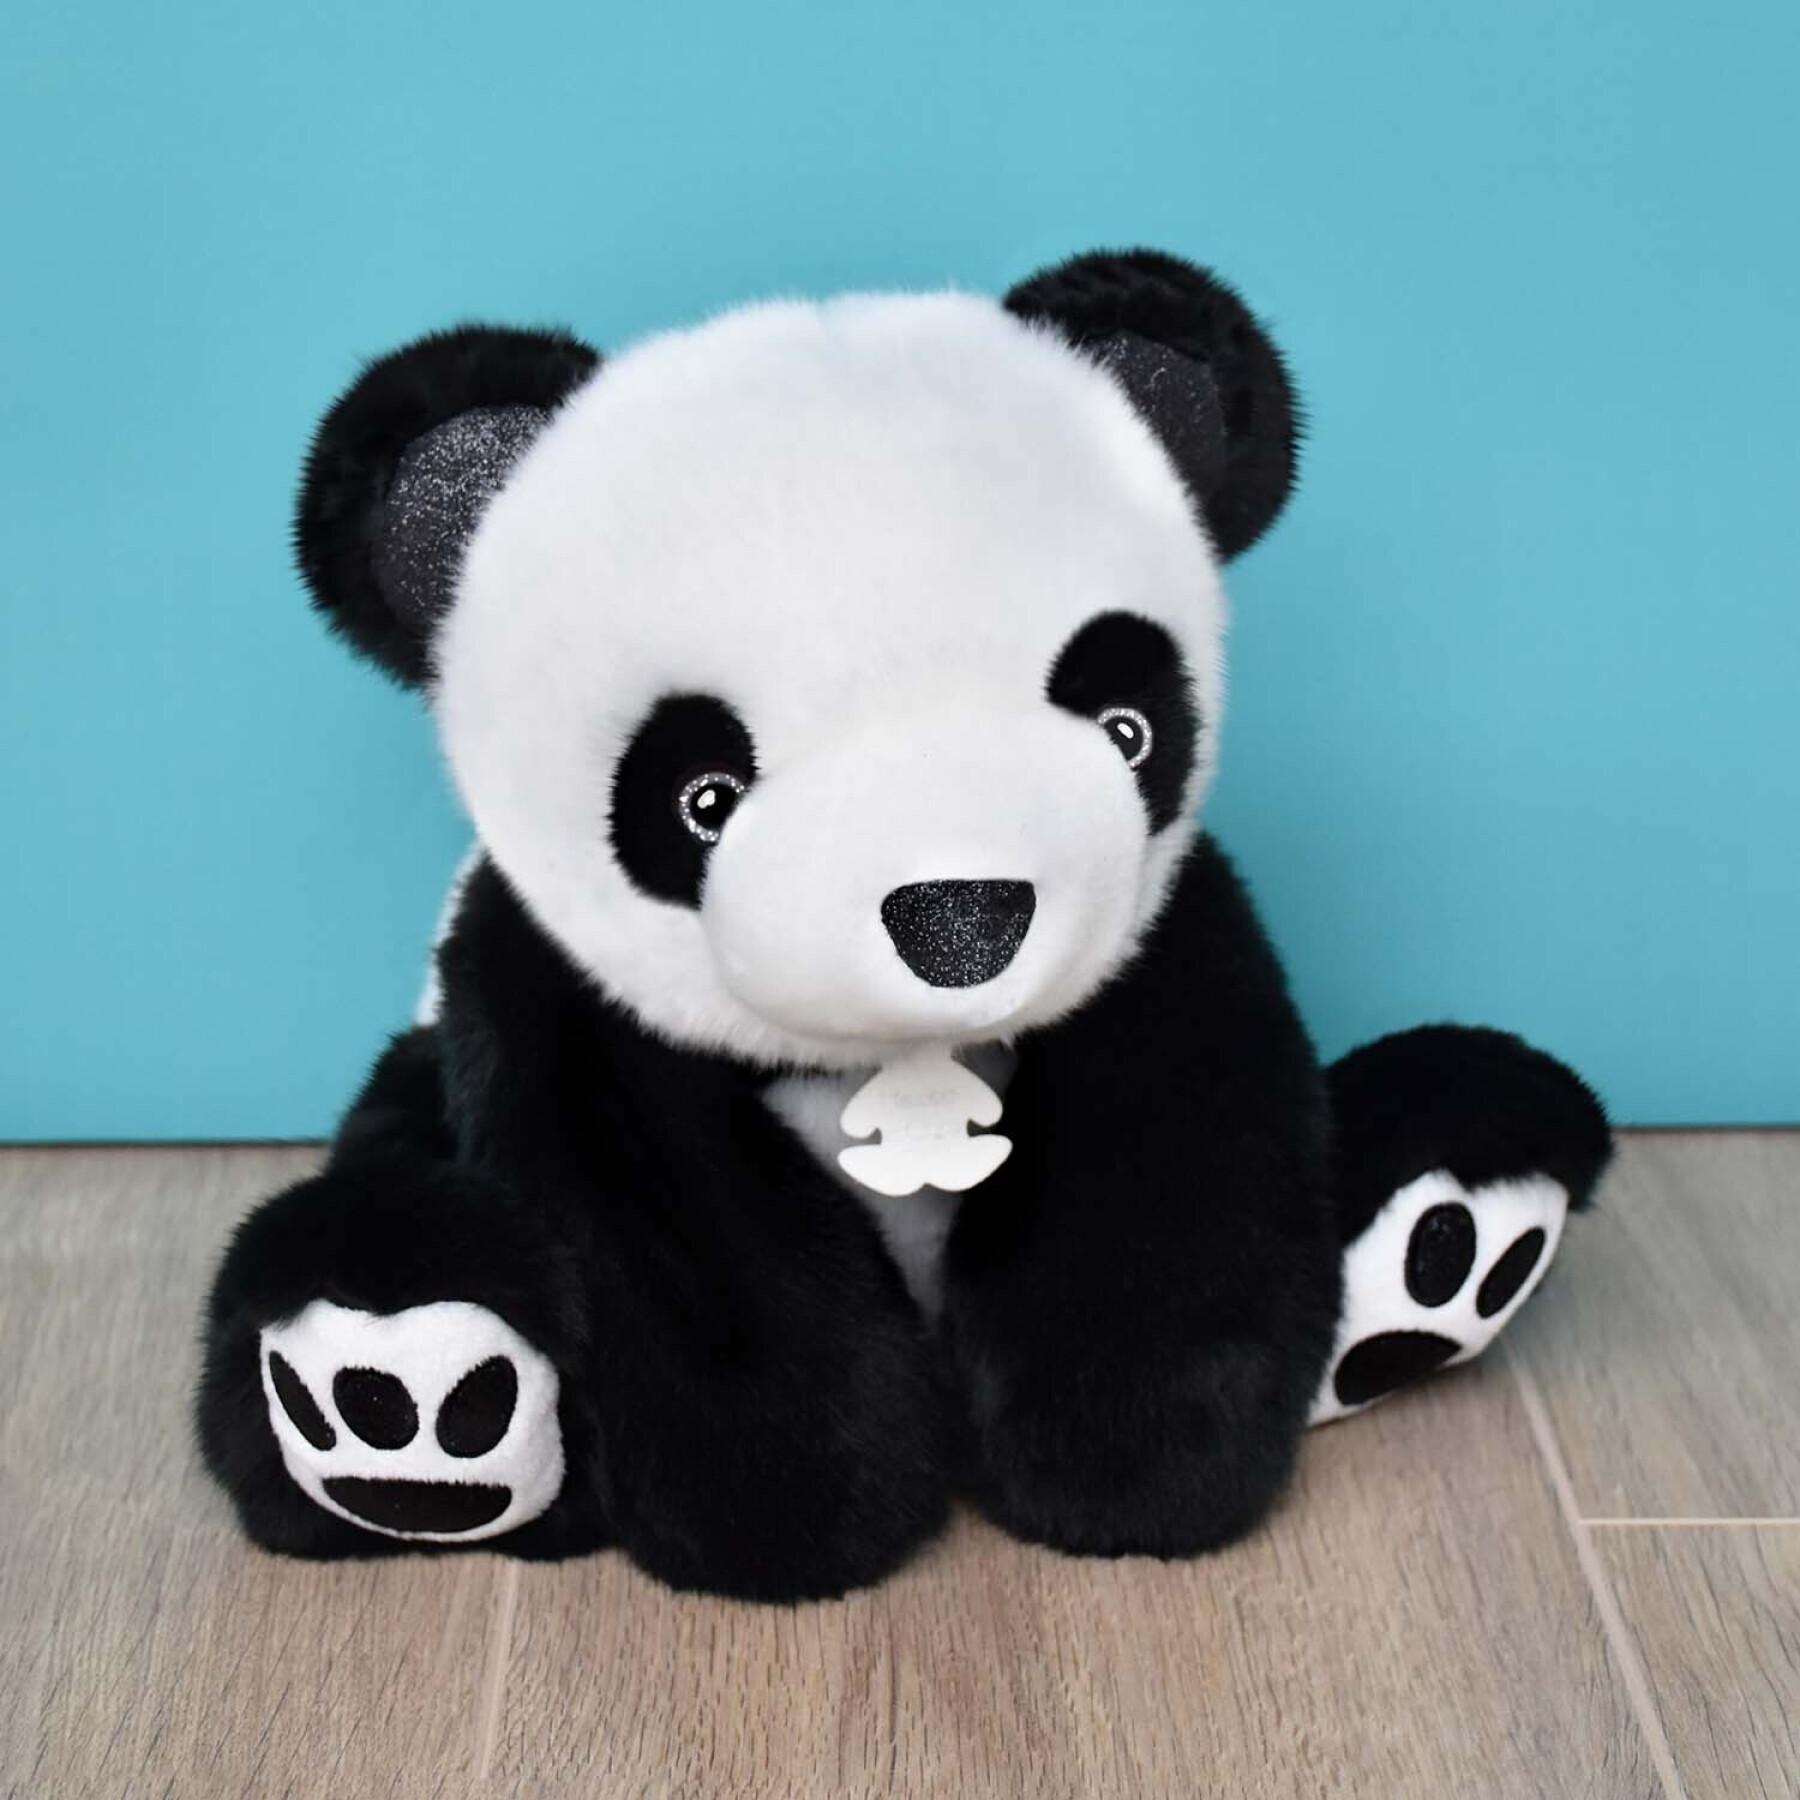 Plush Histoire d'Ours So chic Panda